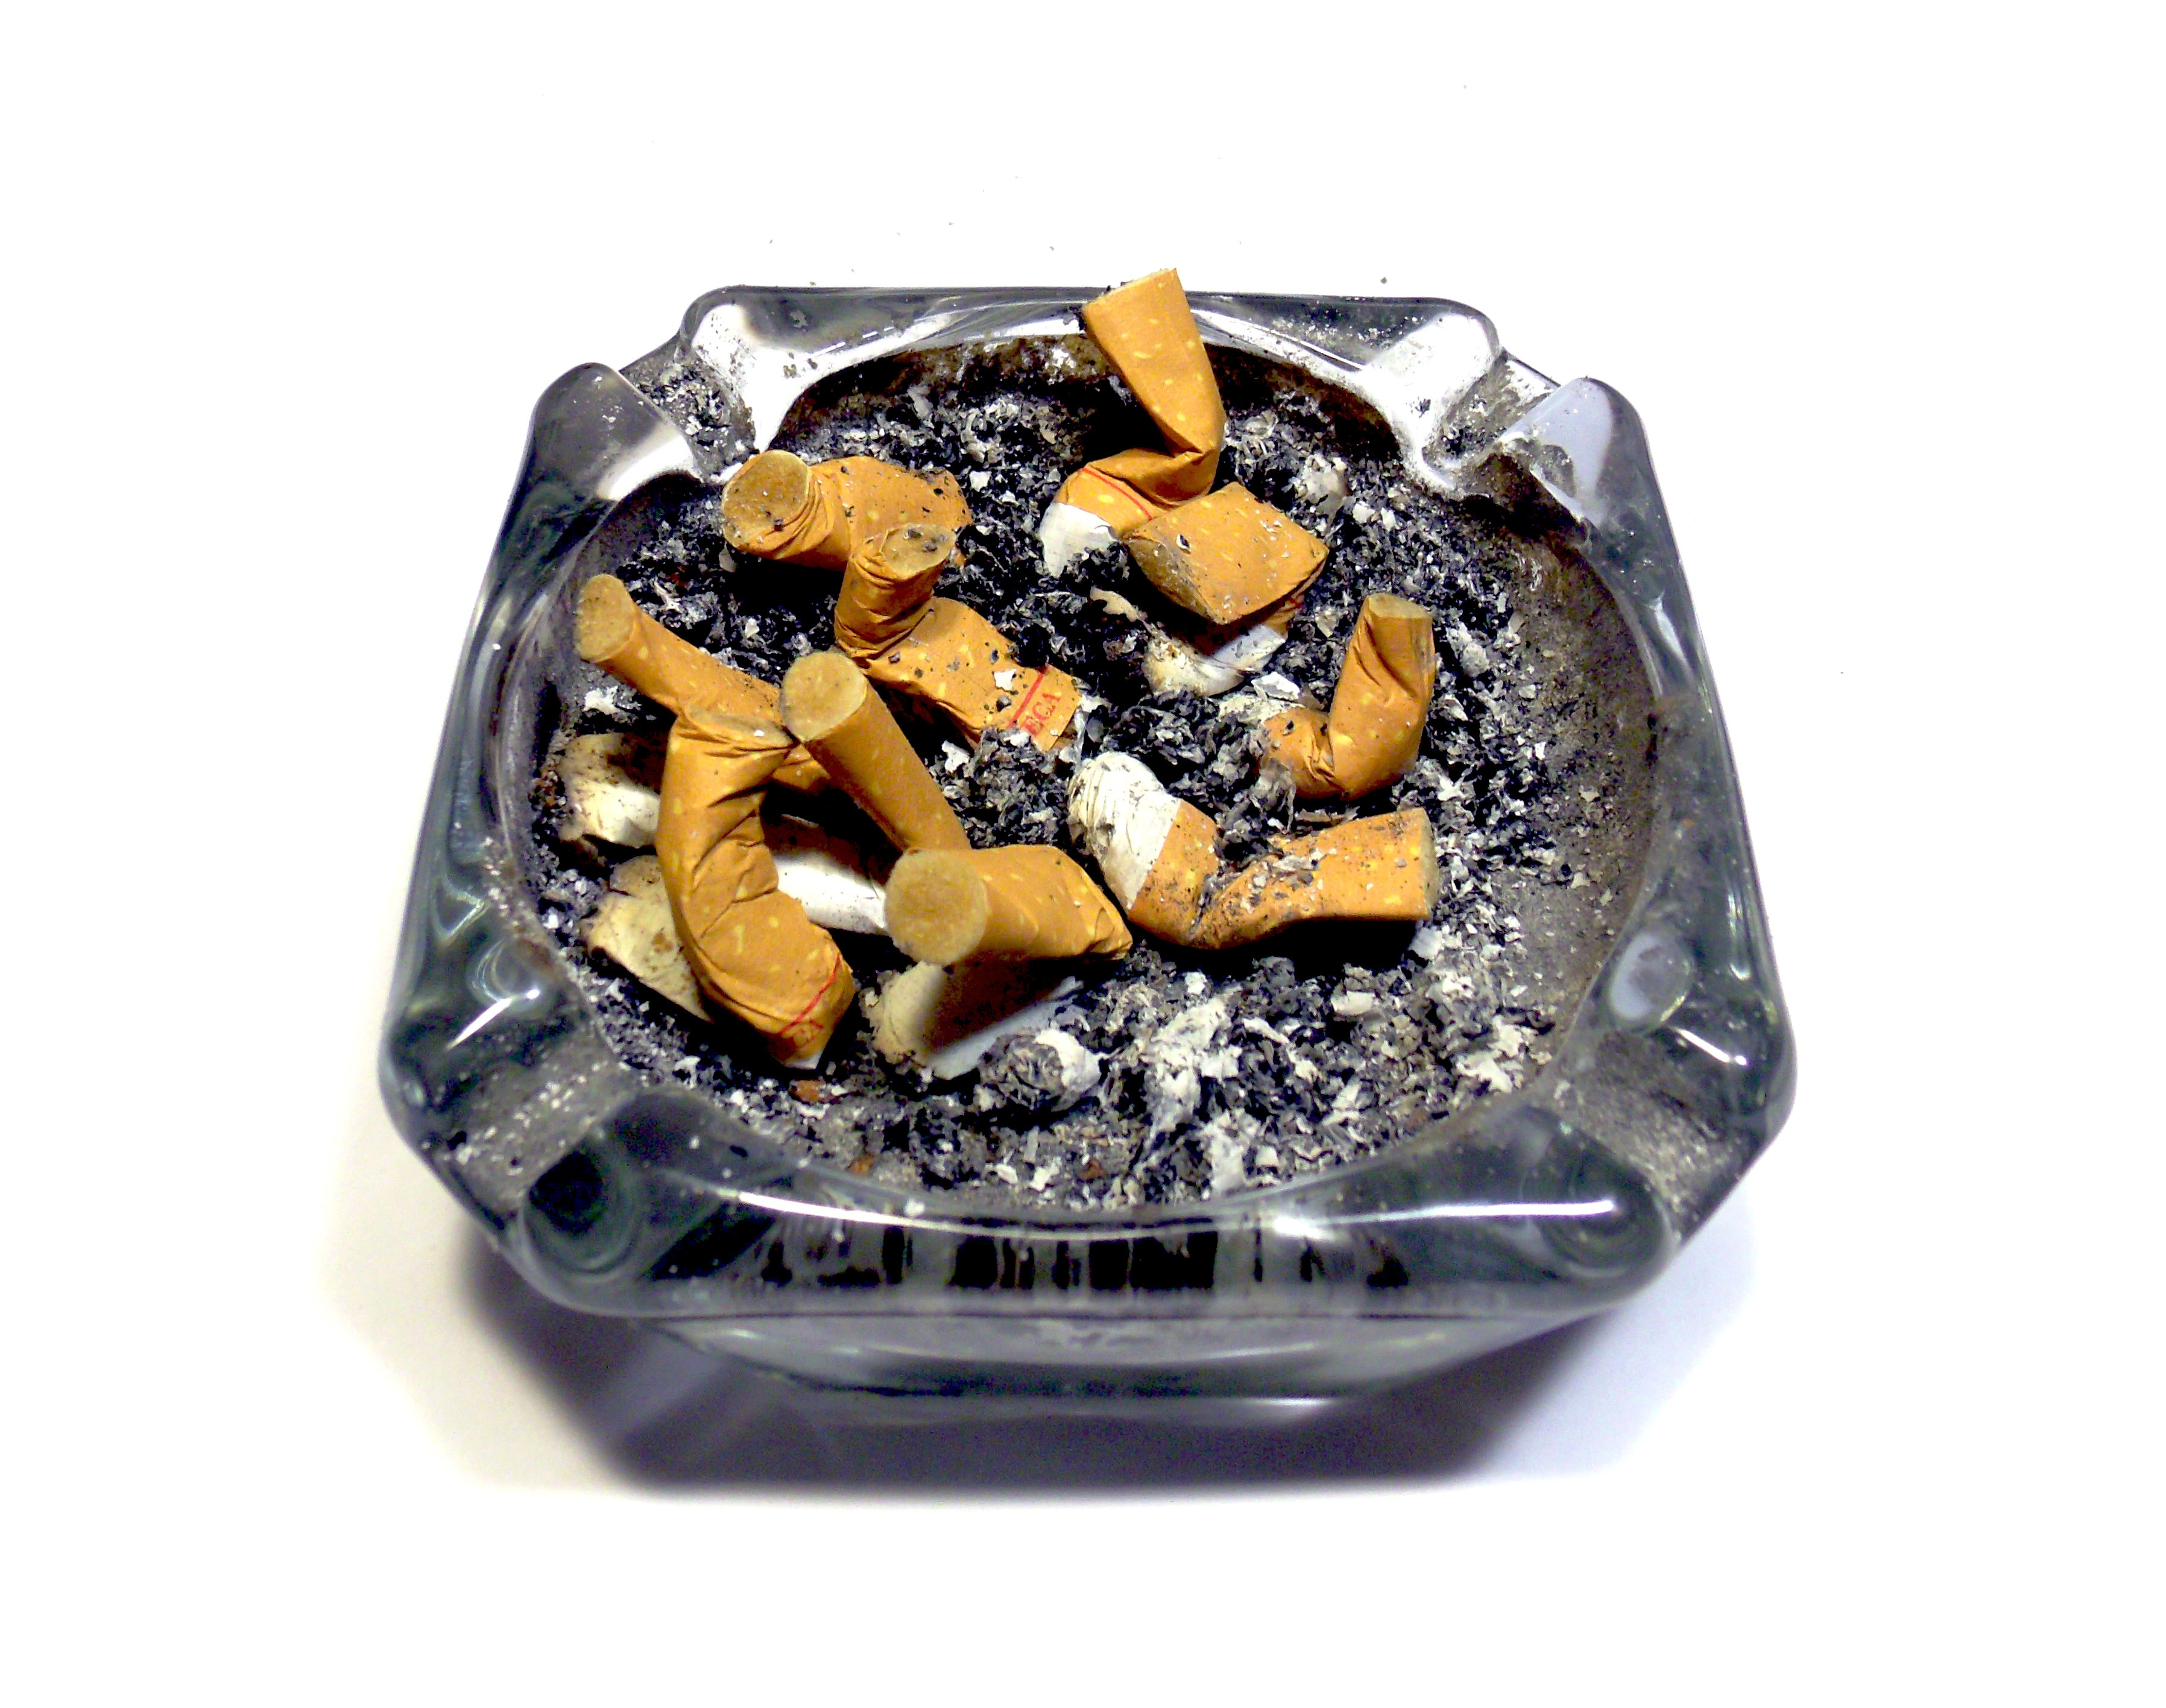 Ashtray with cigarettes photo